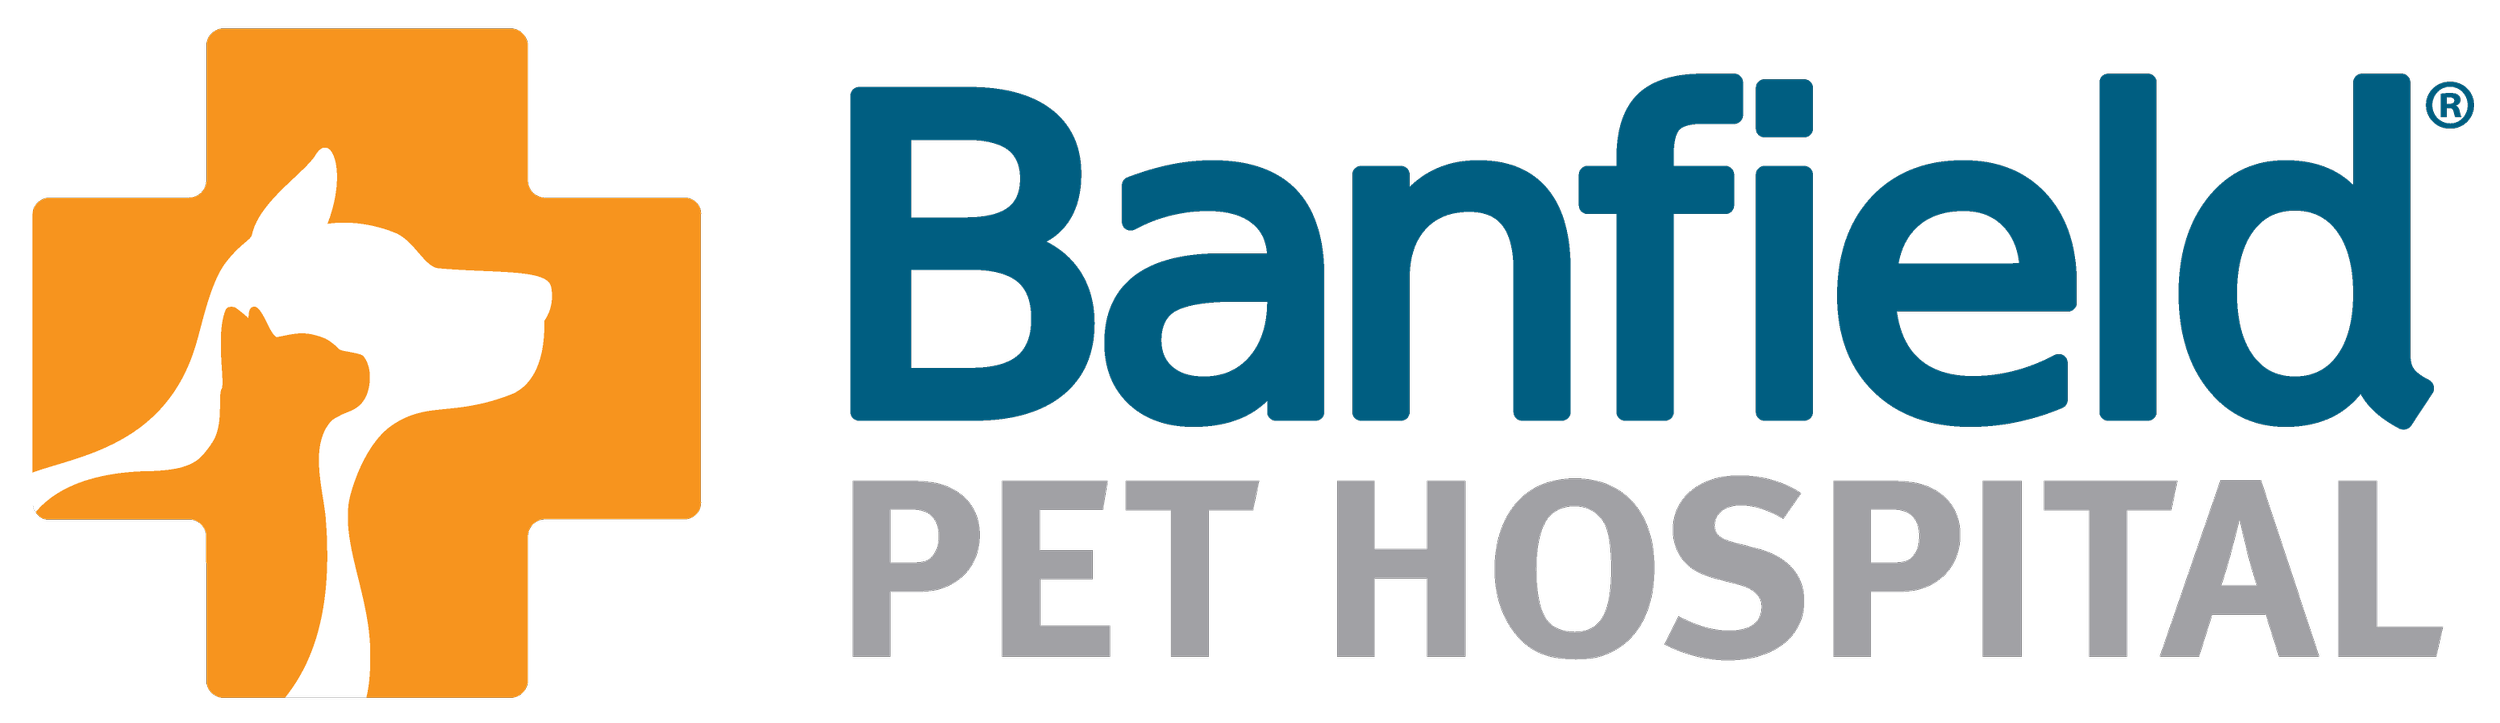 banfield-logo-7.png